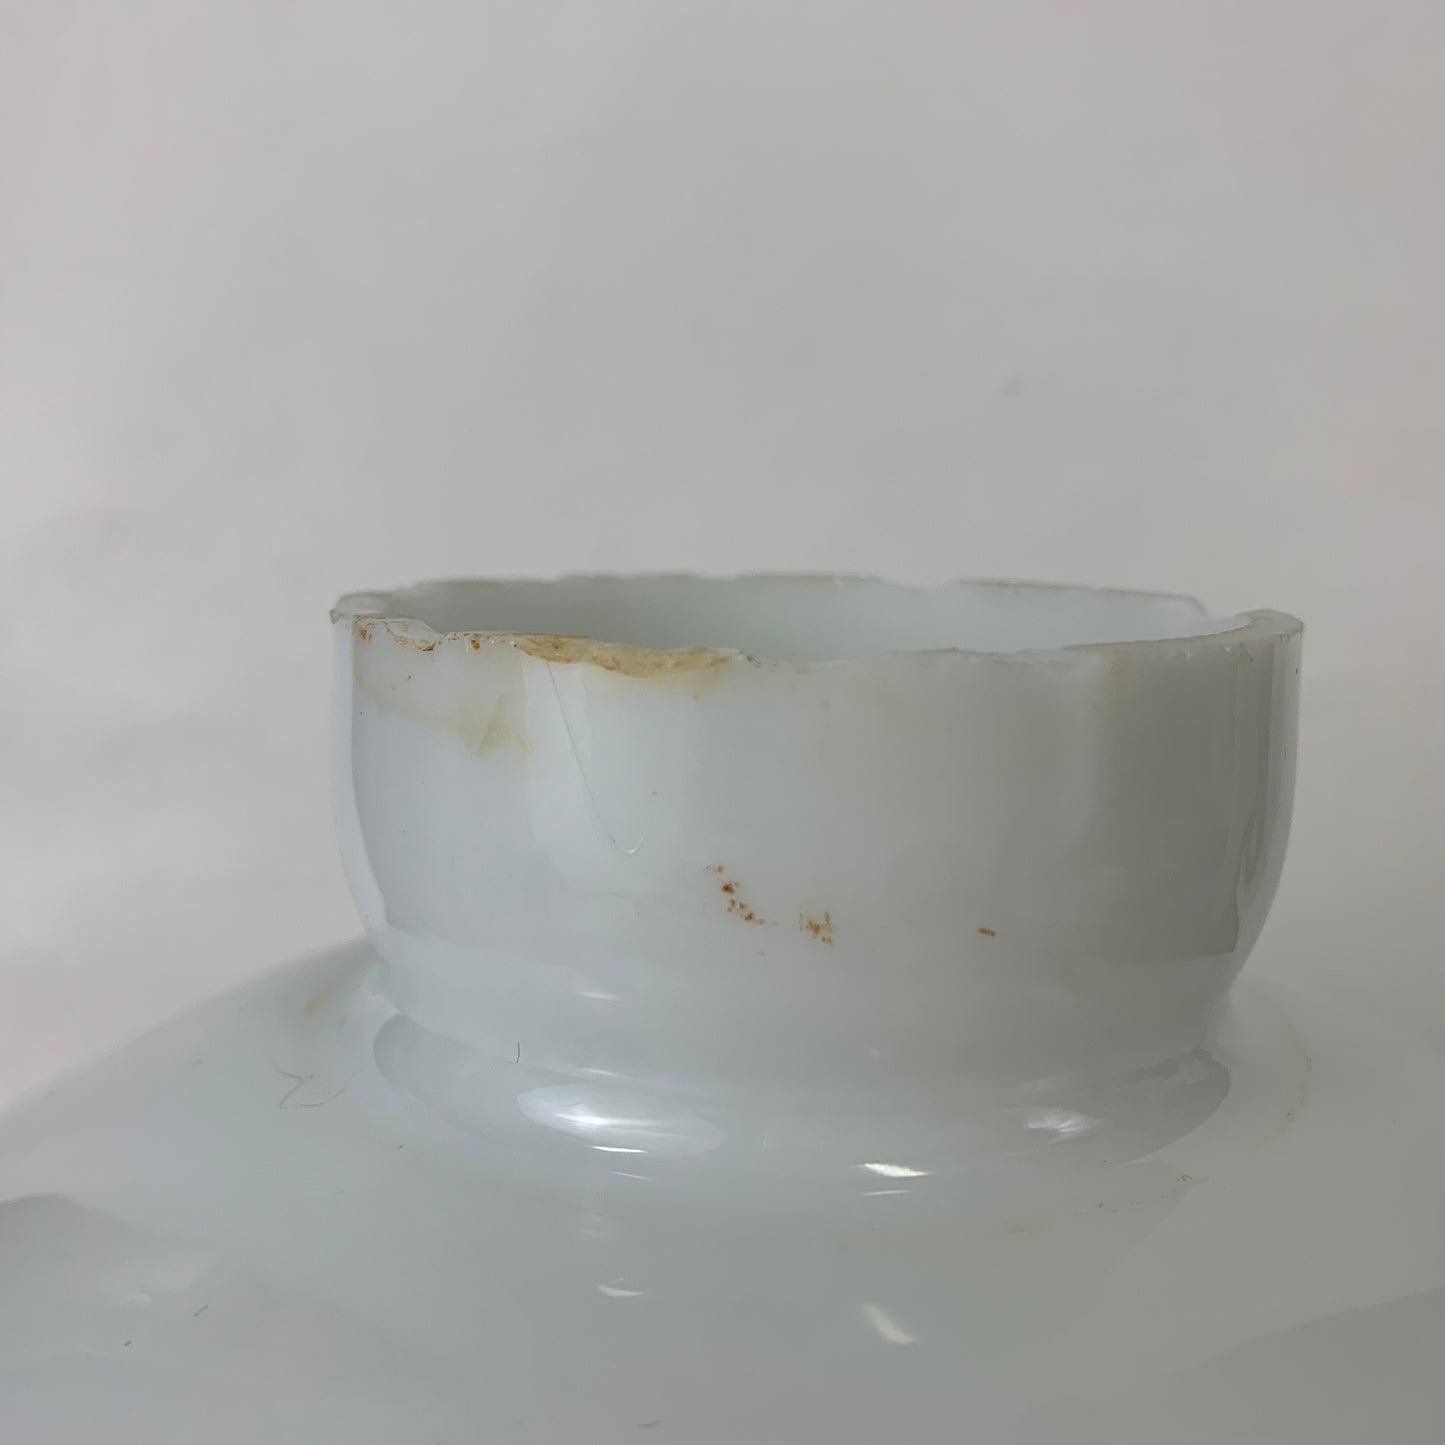 Milk Glass Pendant Shade, Dome Shaped Milk Glass Light Cover